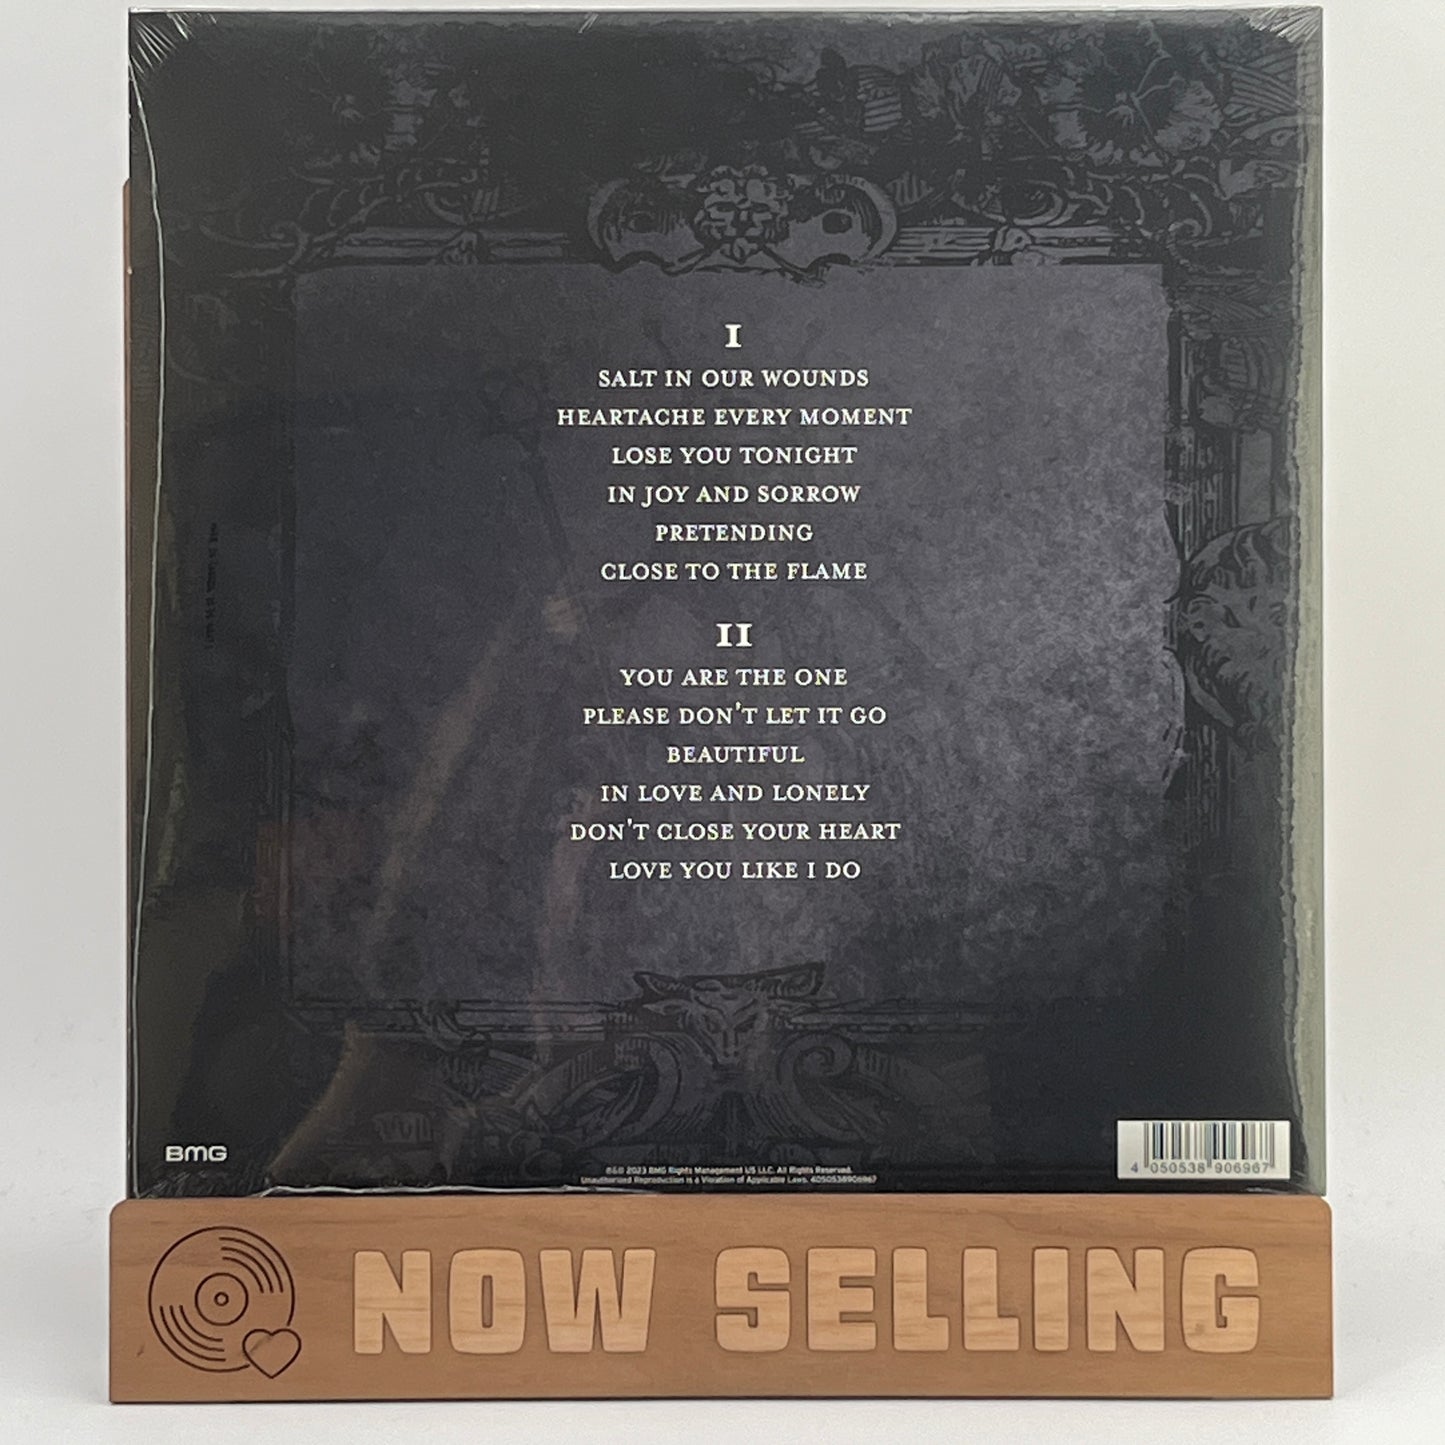 HIM - Deep Shadows And Brilliant Highlights Vinyl LP SEALED Gray Marbled Reissue